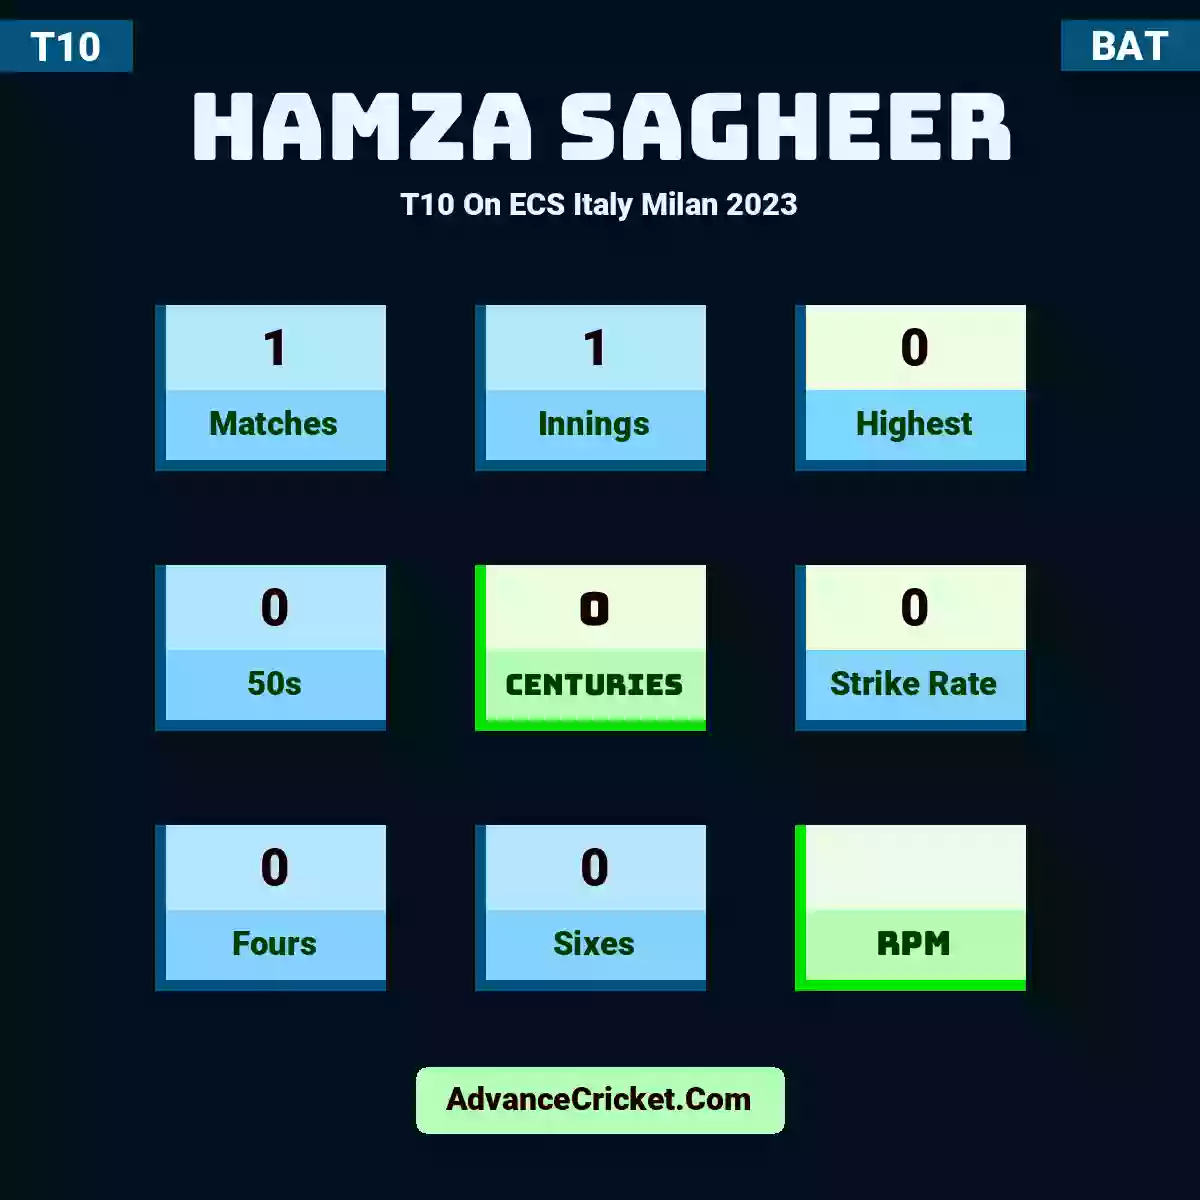 Hamza Sagheer T10  On ECS Italy Milan 2023, Hamza Sagheer played 1 matches, scored 0 runs as highest, 0 half-centuries, and 0 centuries, with a strike rate of 0. H.Sagheer hit 0 fours and 0 sixes.